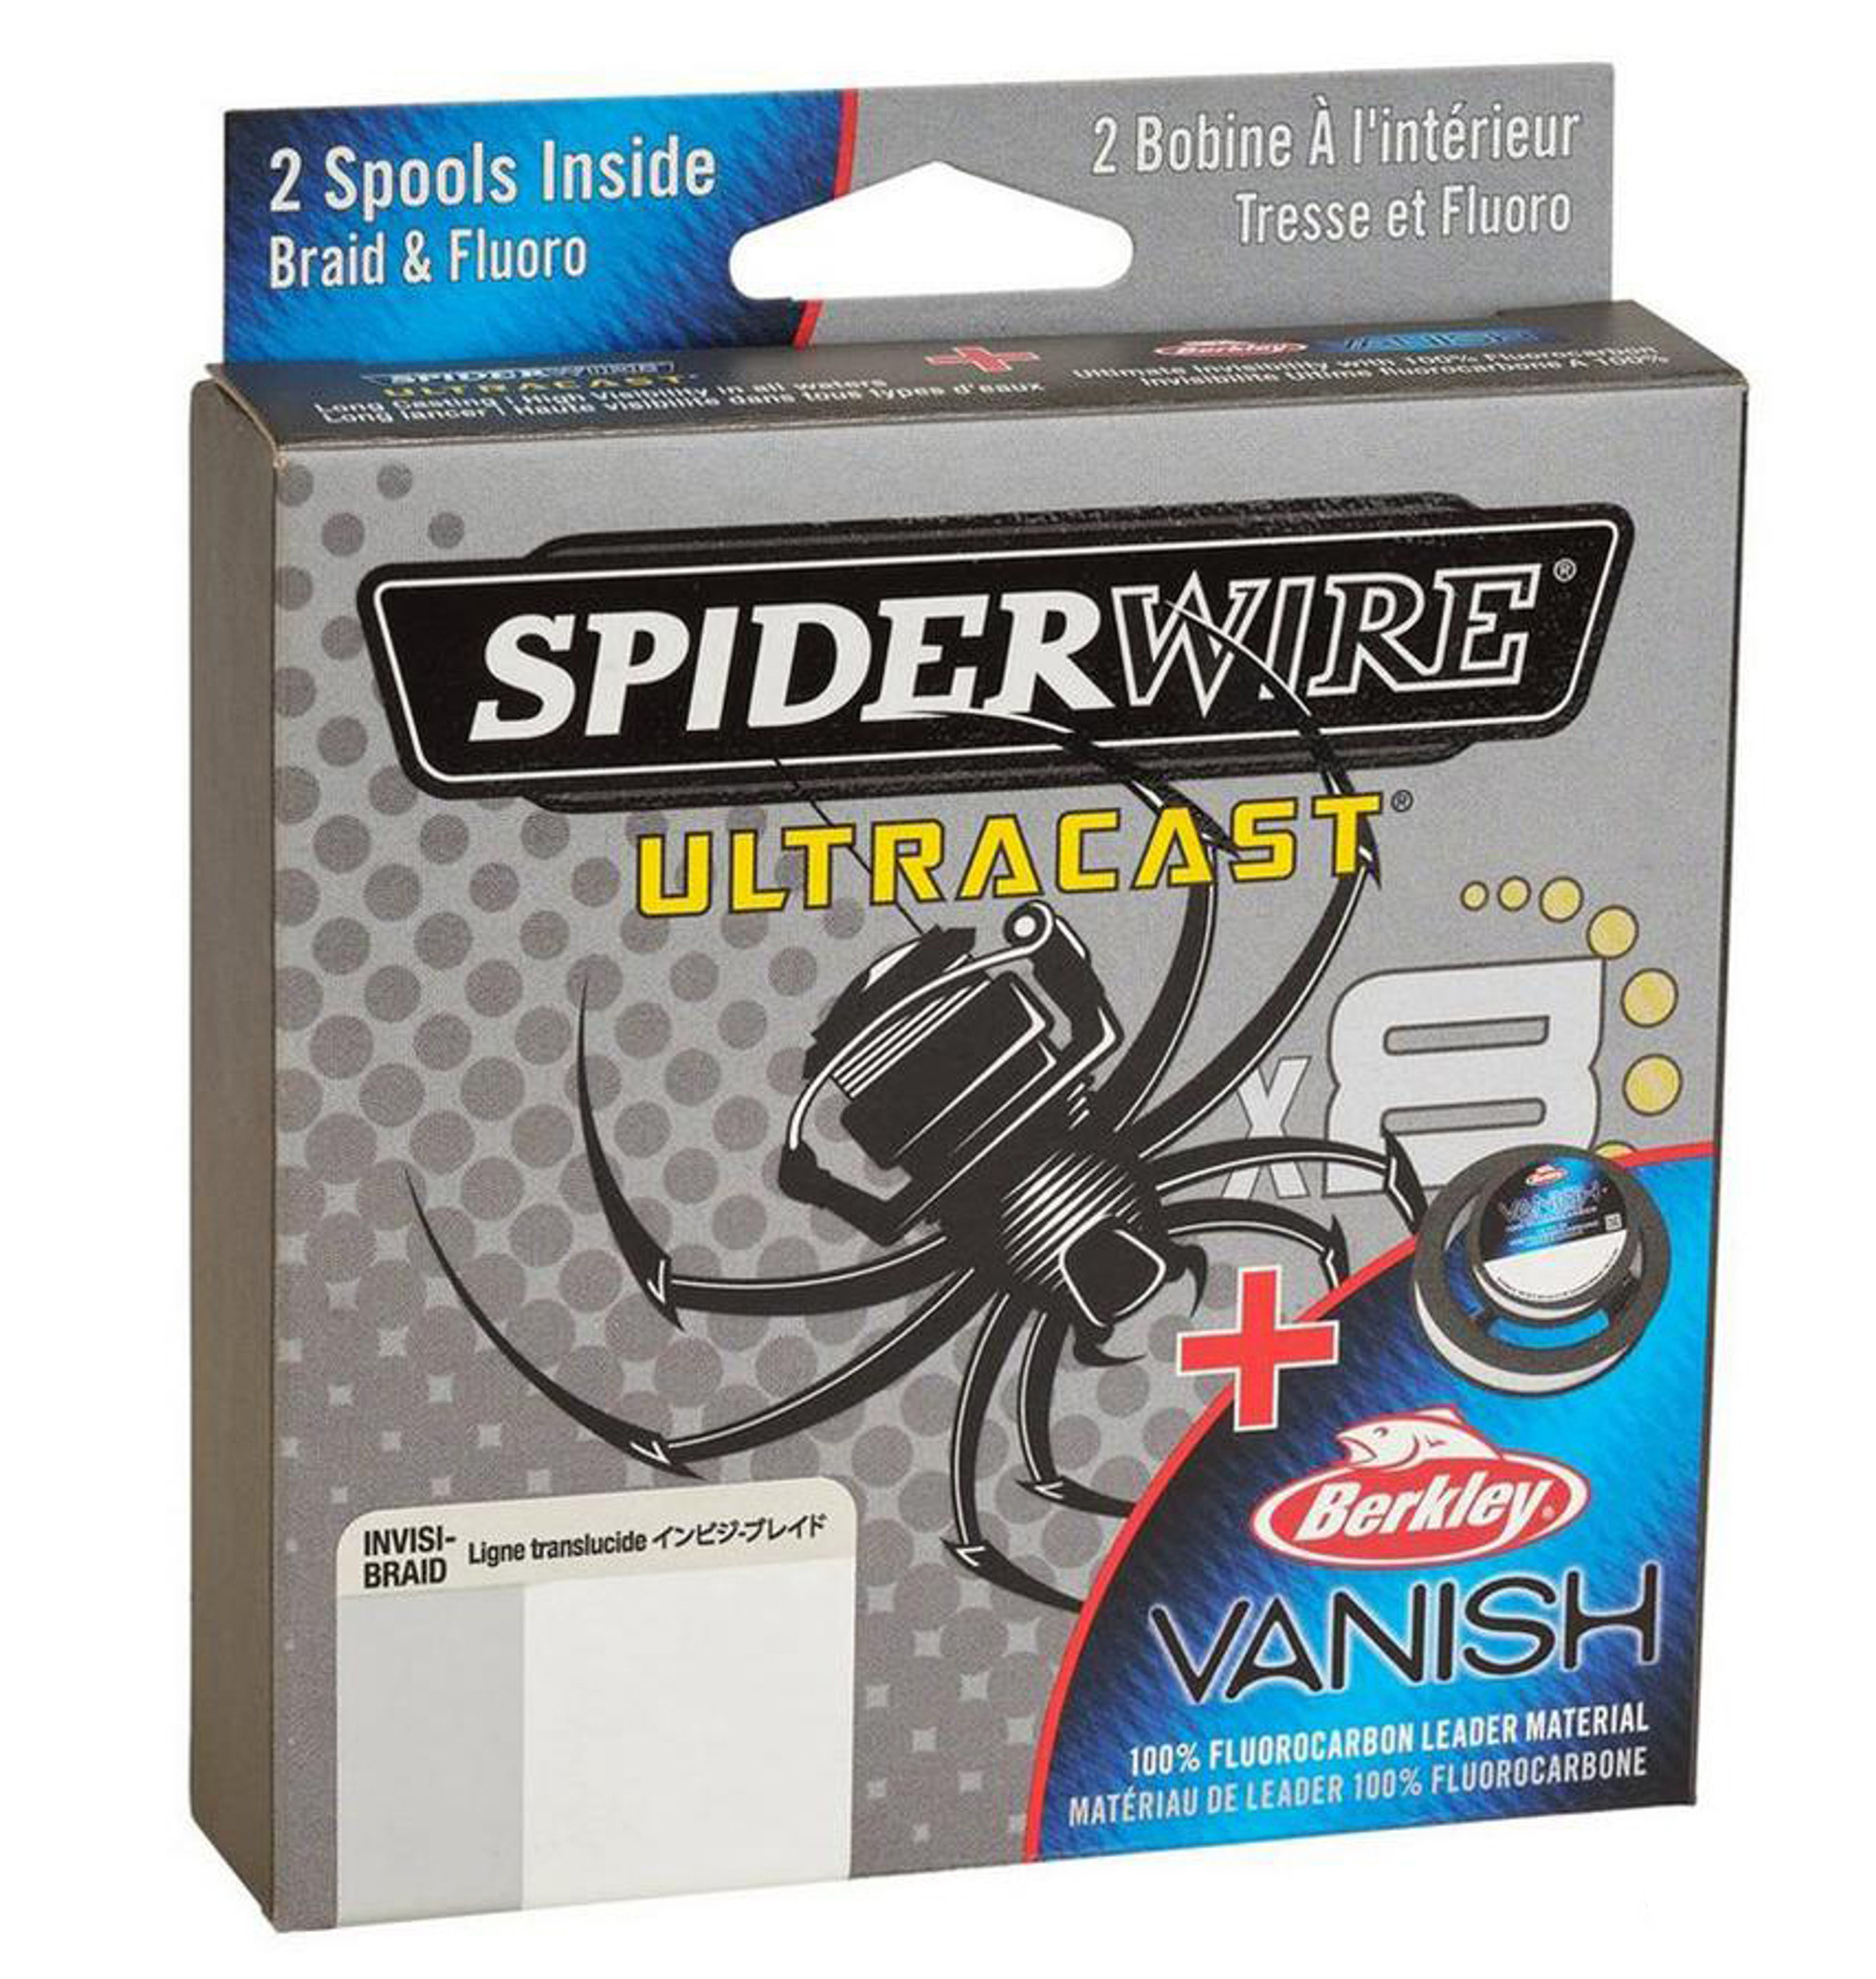 SpiderWire UltraCast Vanish Dual Spool Fluorocarbon Leader